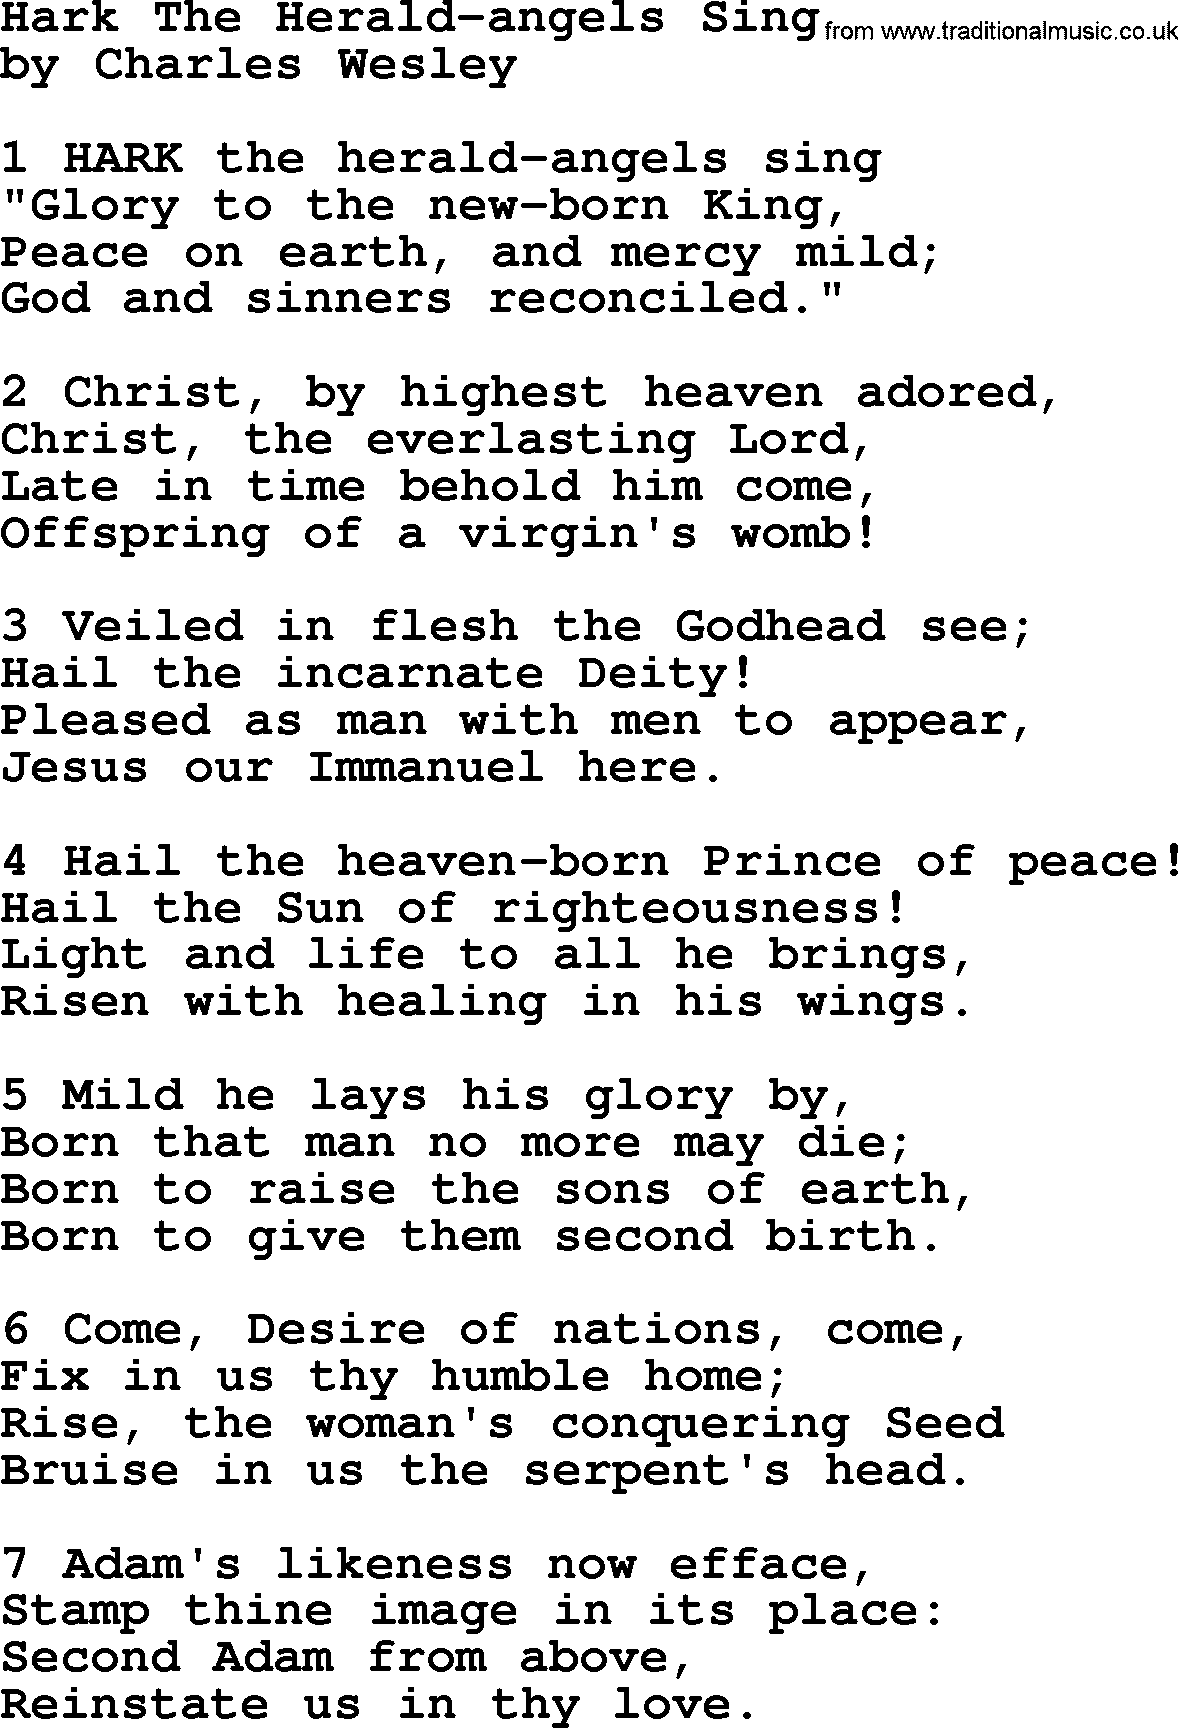 Charles Wesley hymn: Hark The Herald-angels Sing, lyrics